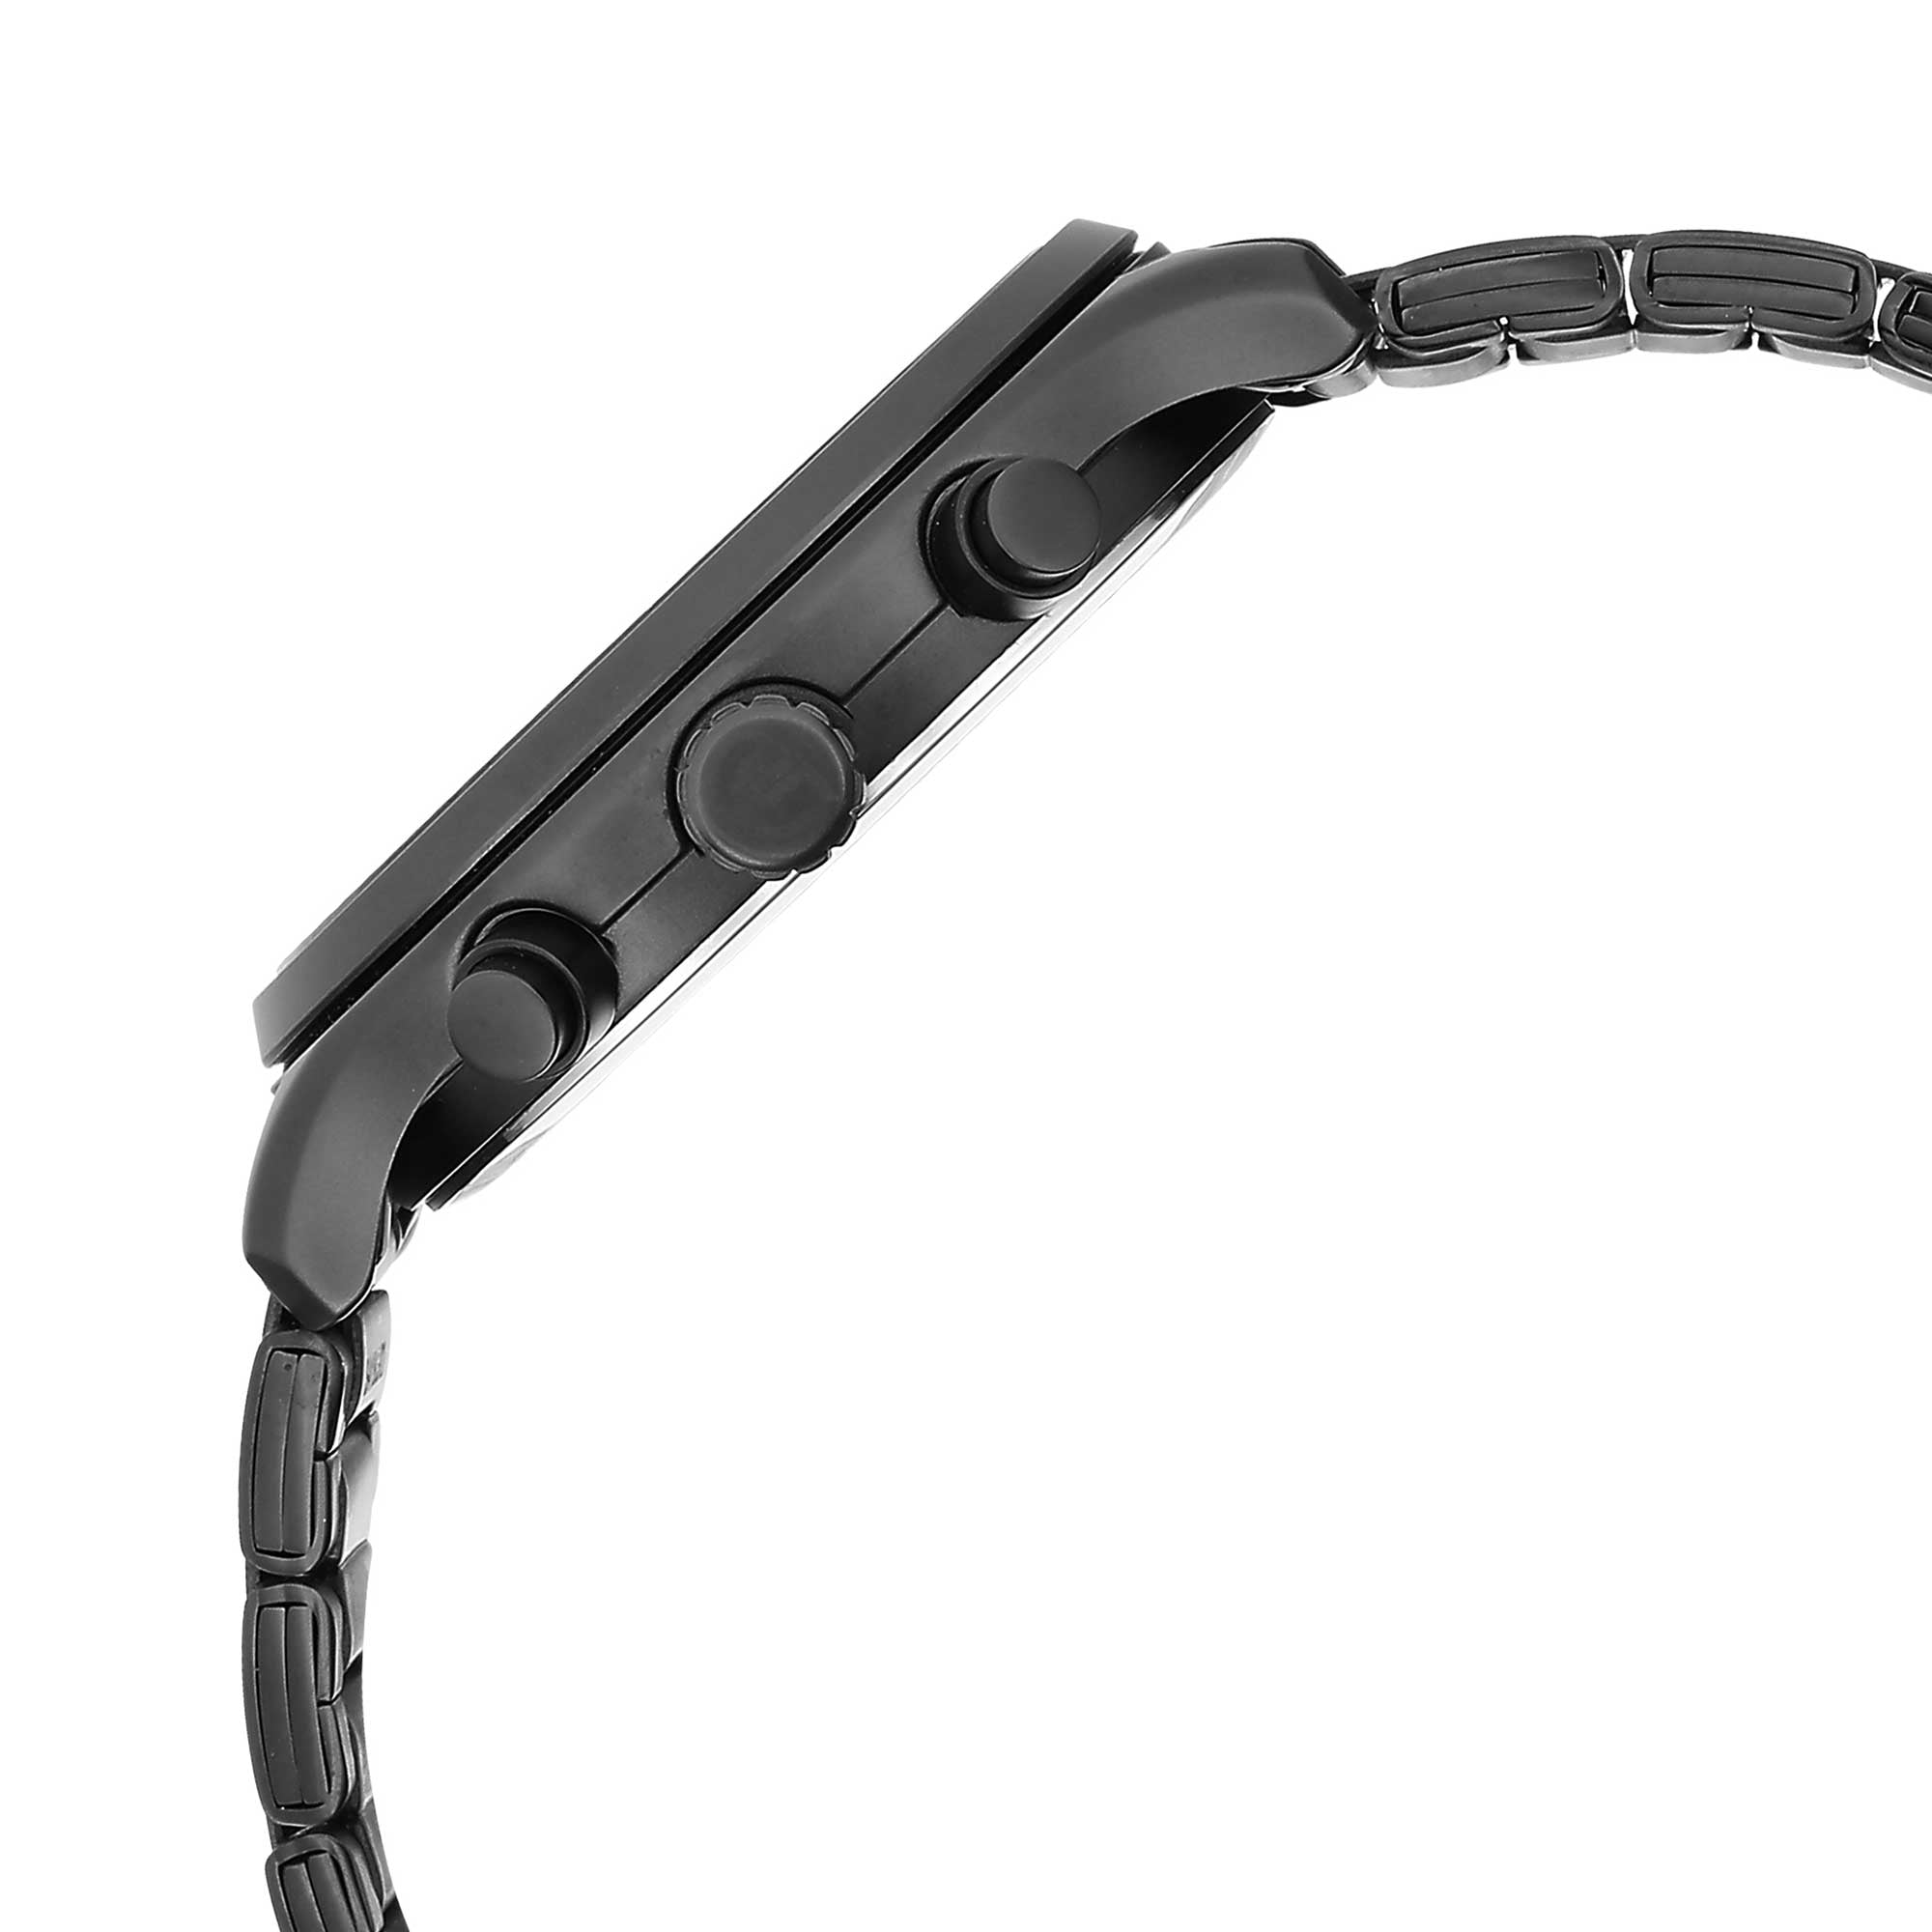 Titan Neo Black Dial Multi Stainless Steel Strap watch for Men